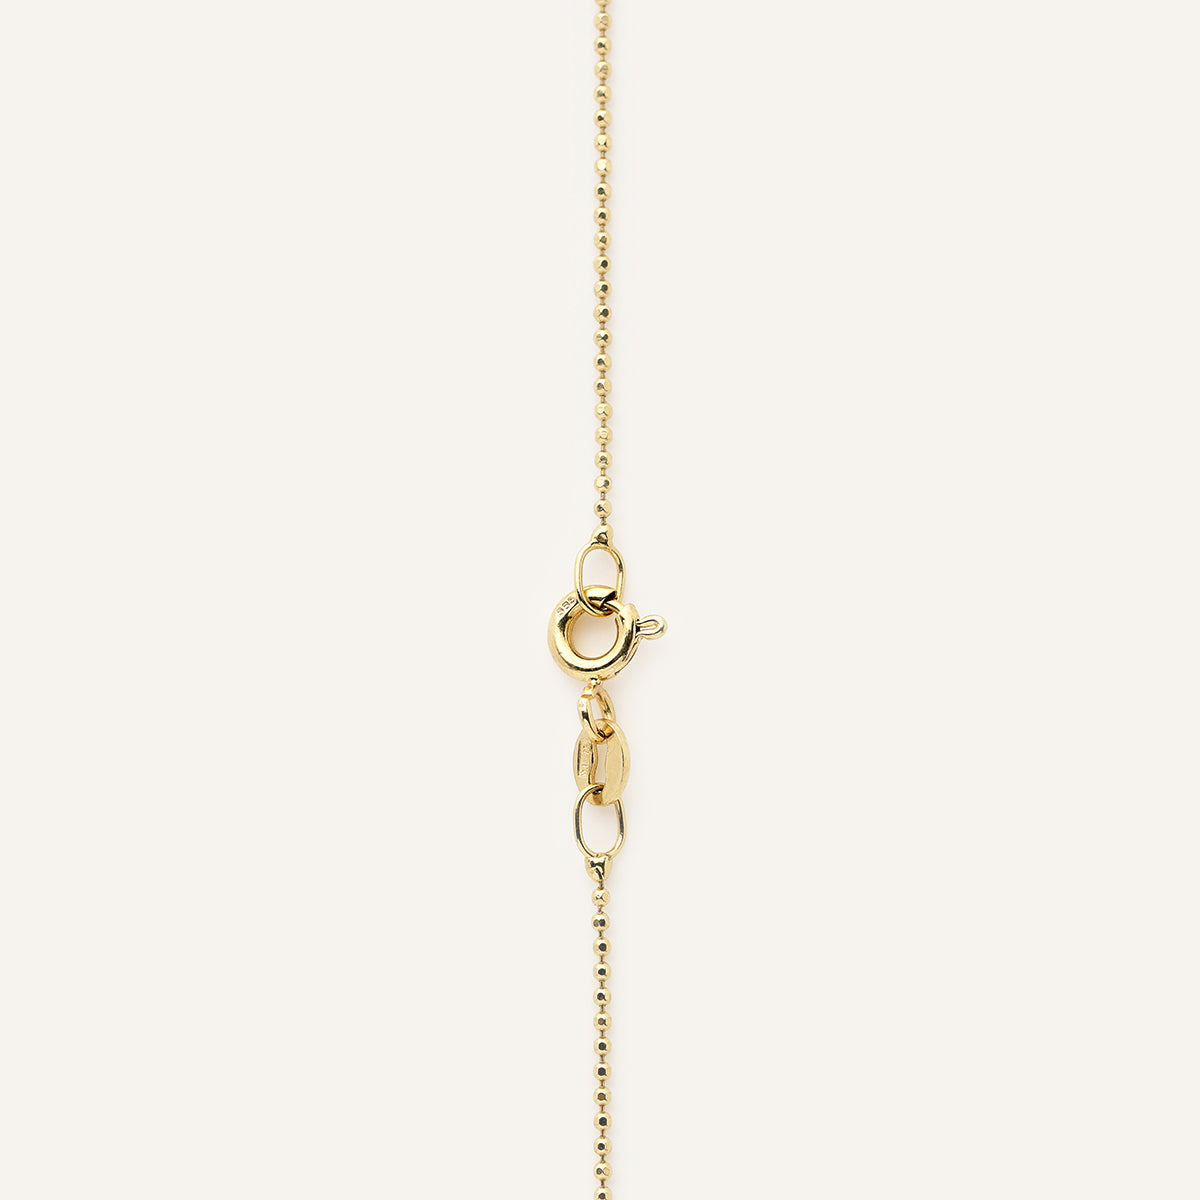 Gold Bead Chain